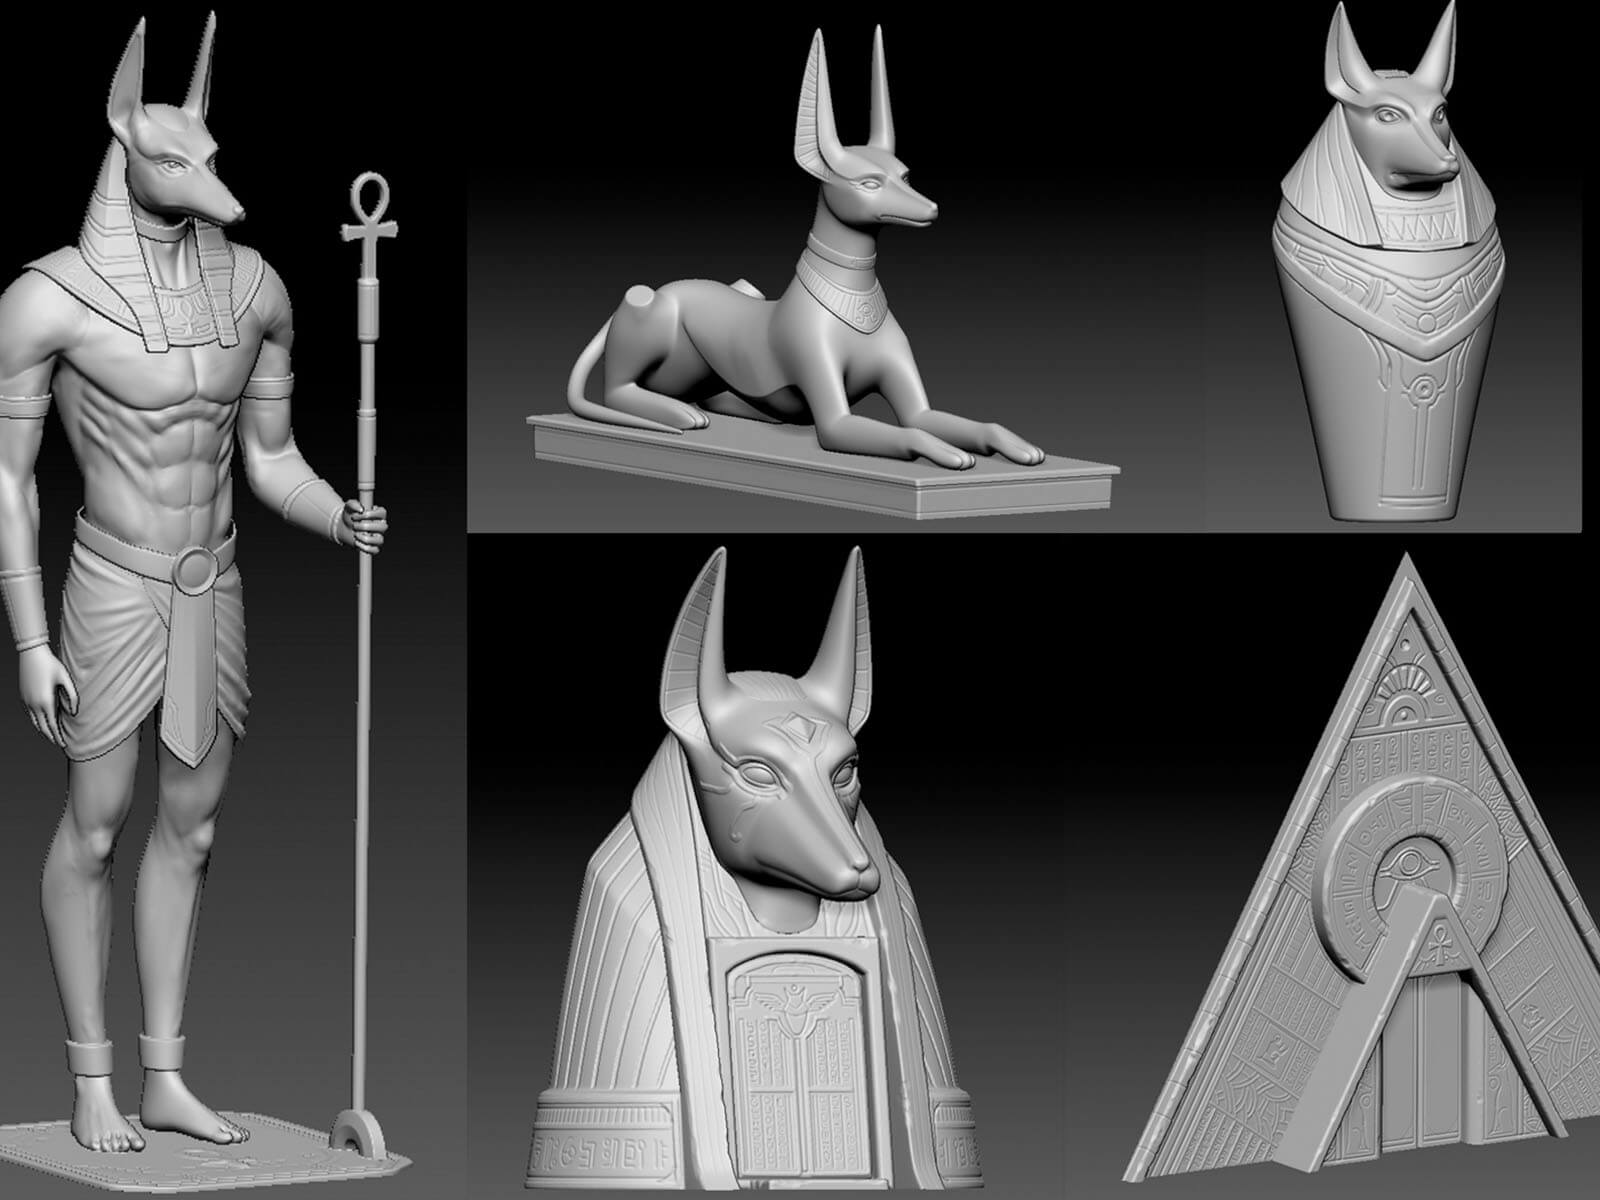 CGI models of Anubis and jackal statuaries.